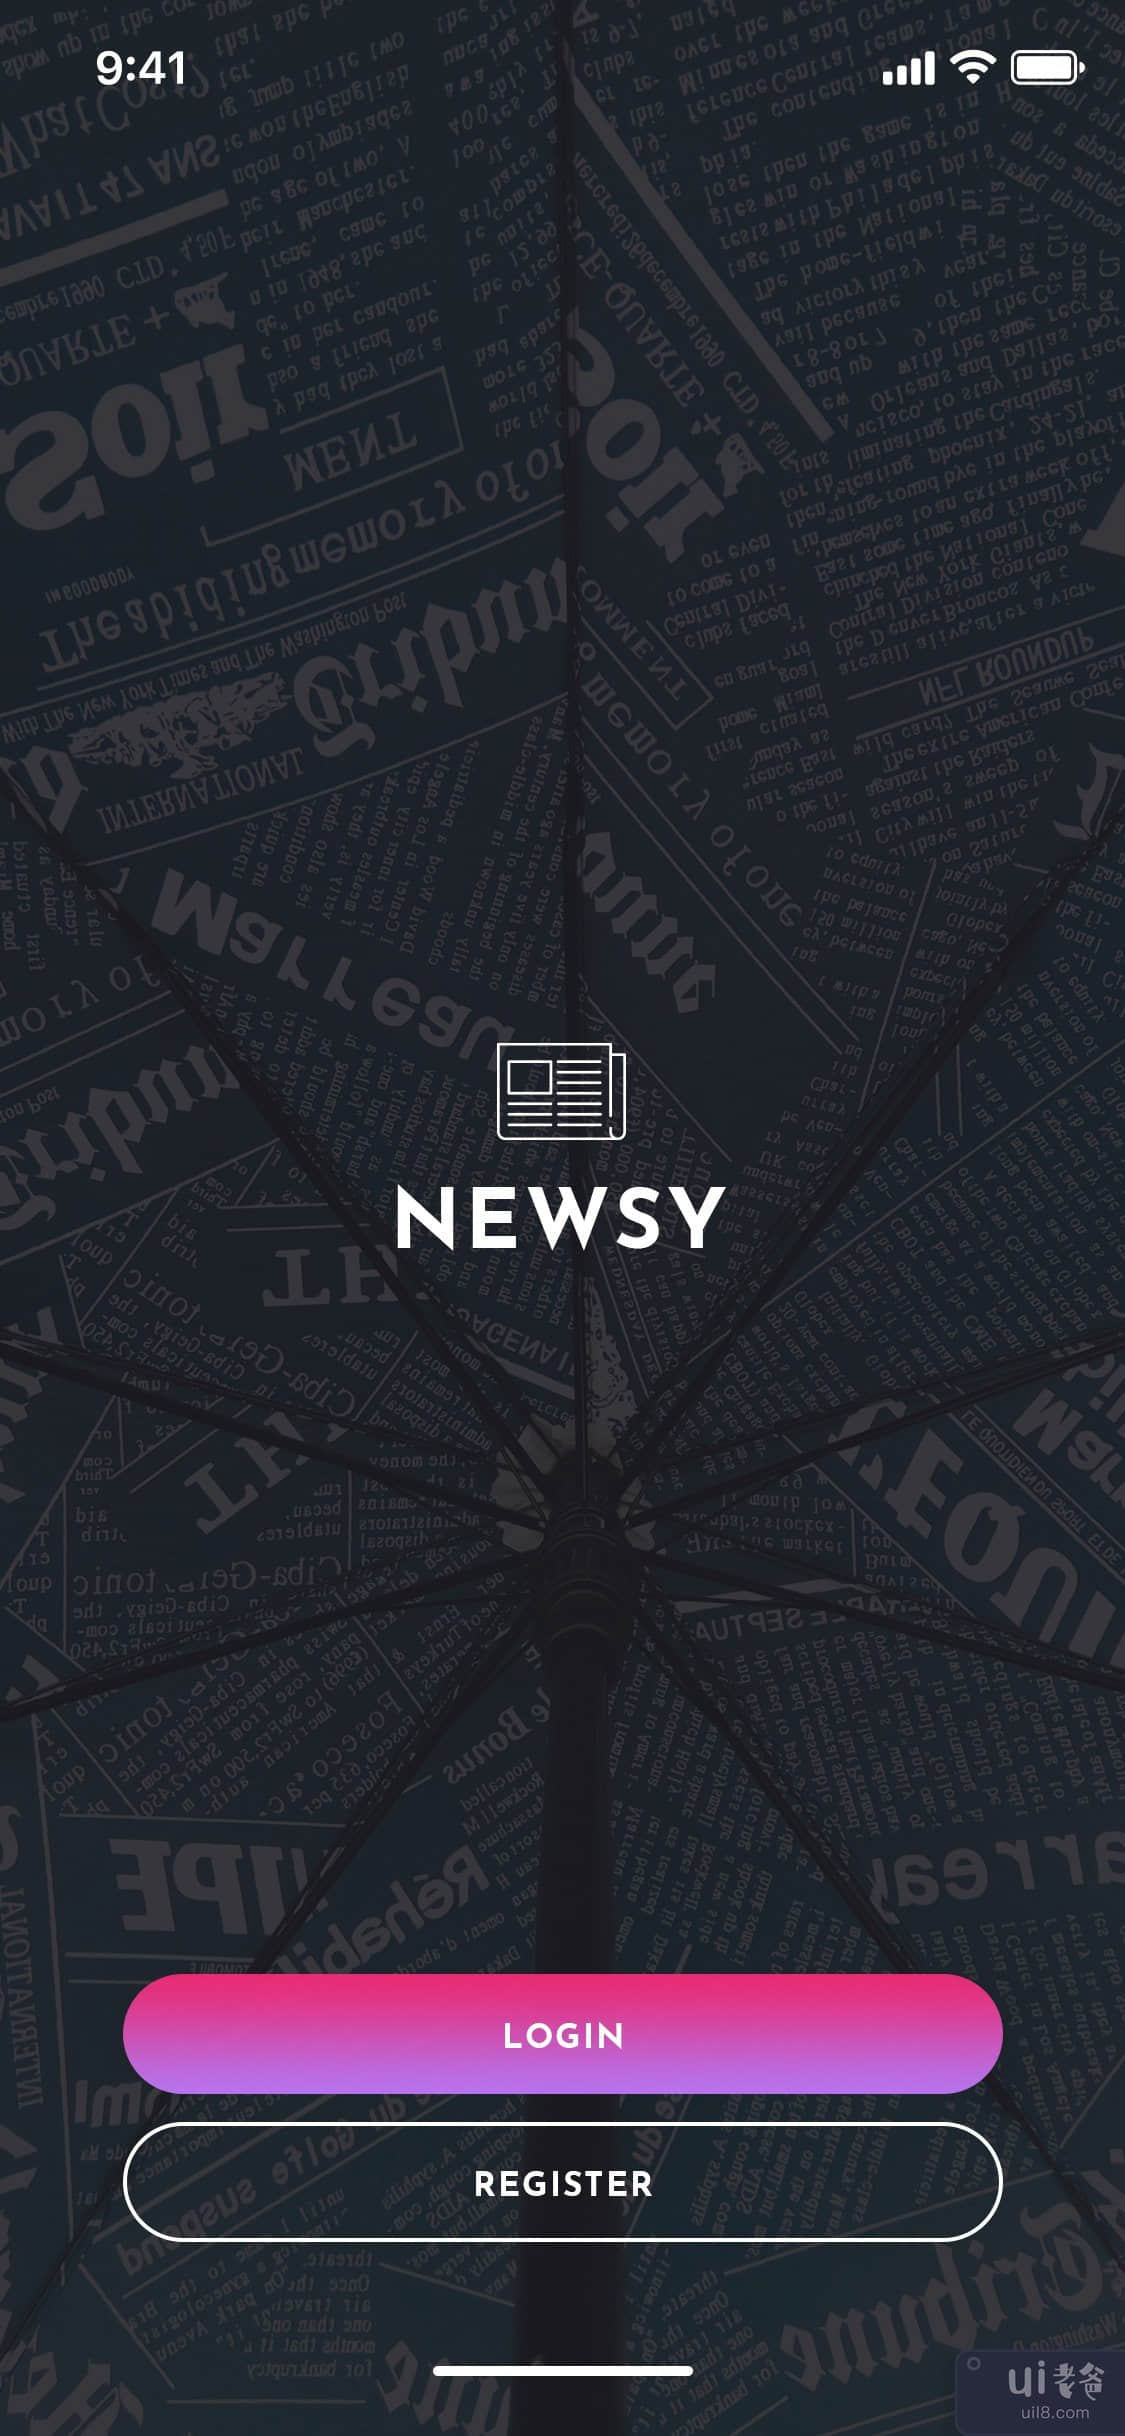 Newsy News 移动应用程序 UI 套件(Newsy News Mobile App UI Kit)插图